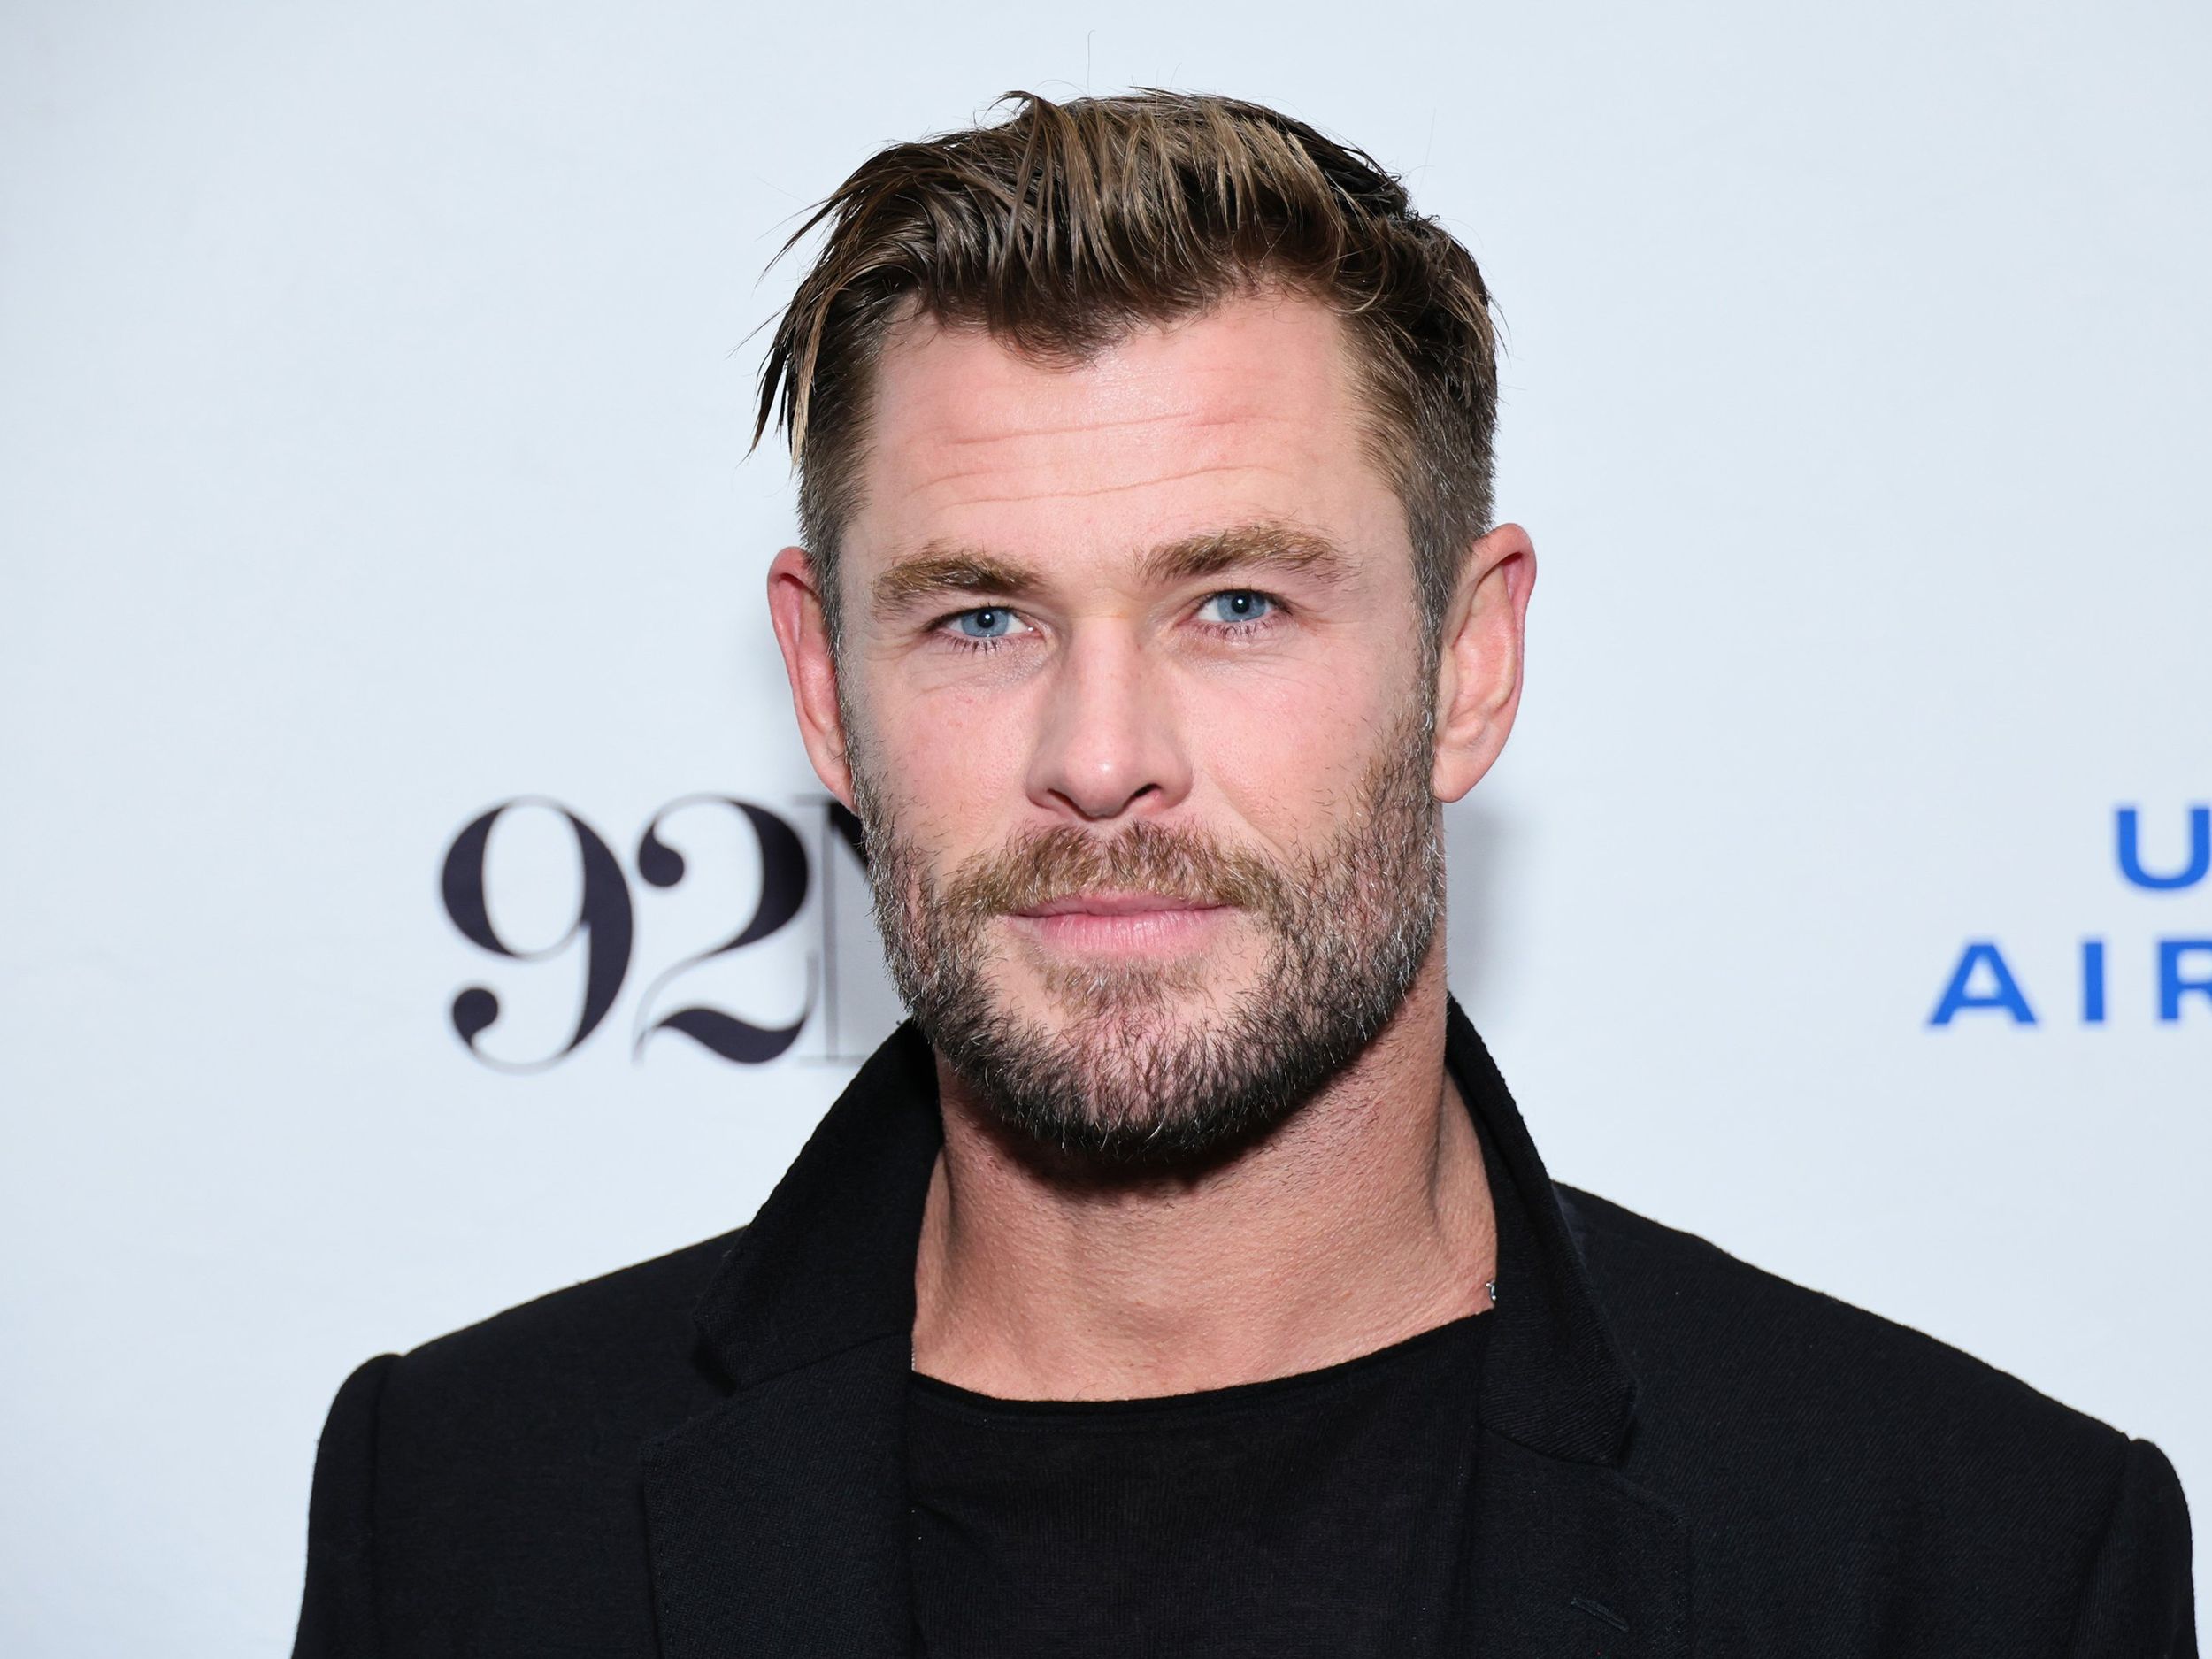 Chris Hemsworth 'got sick' of 'Thor' movies 'every couple of years